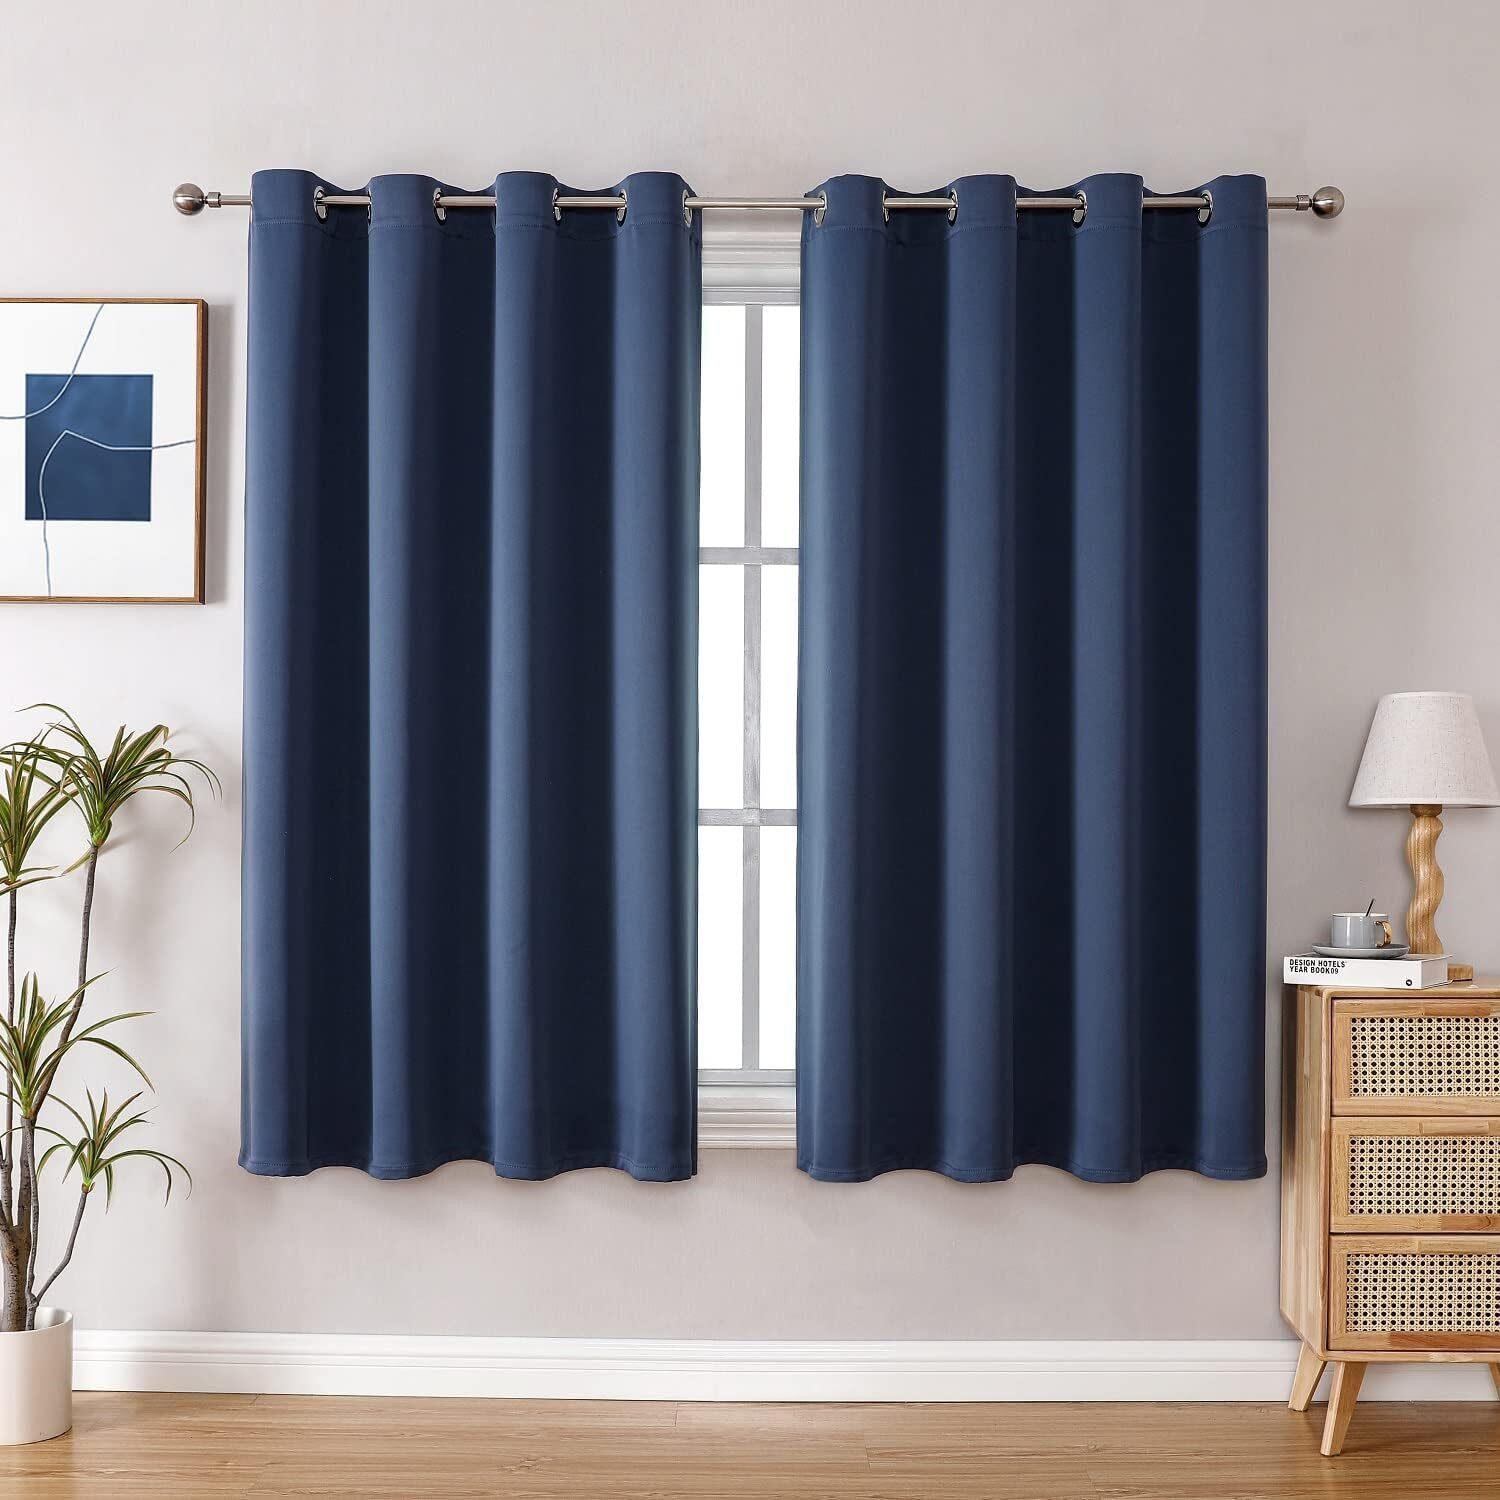 ChrisDowa Blackout Curtains  52W x 54L  Blue